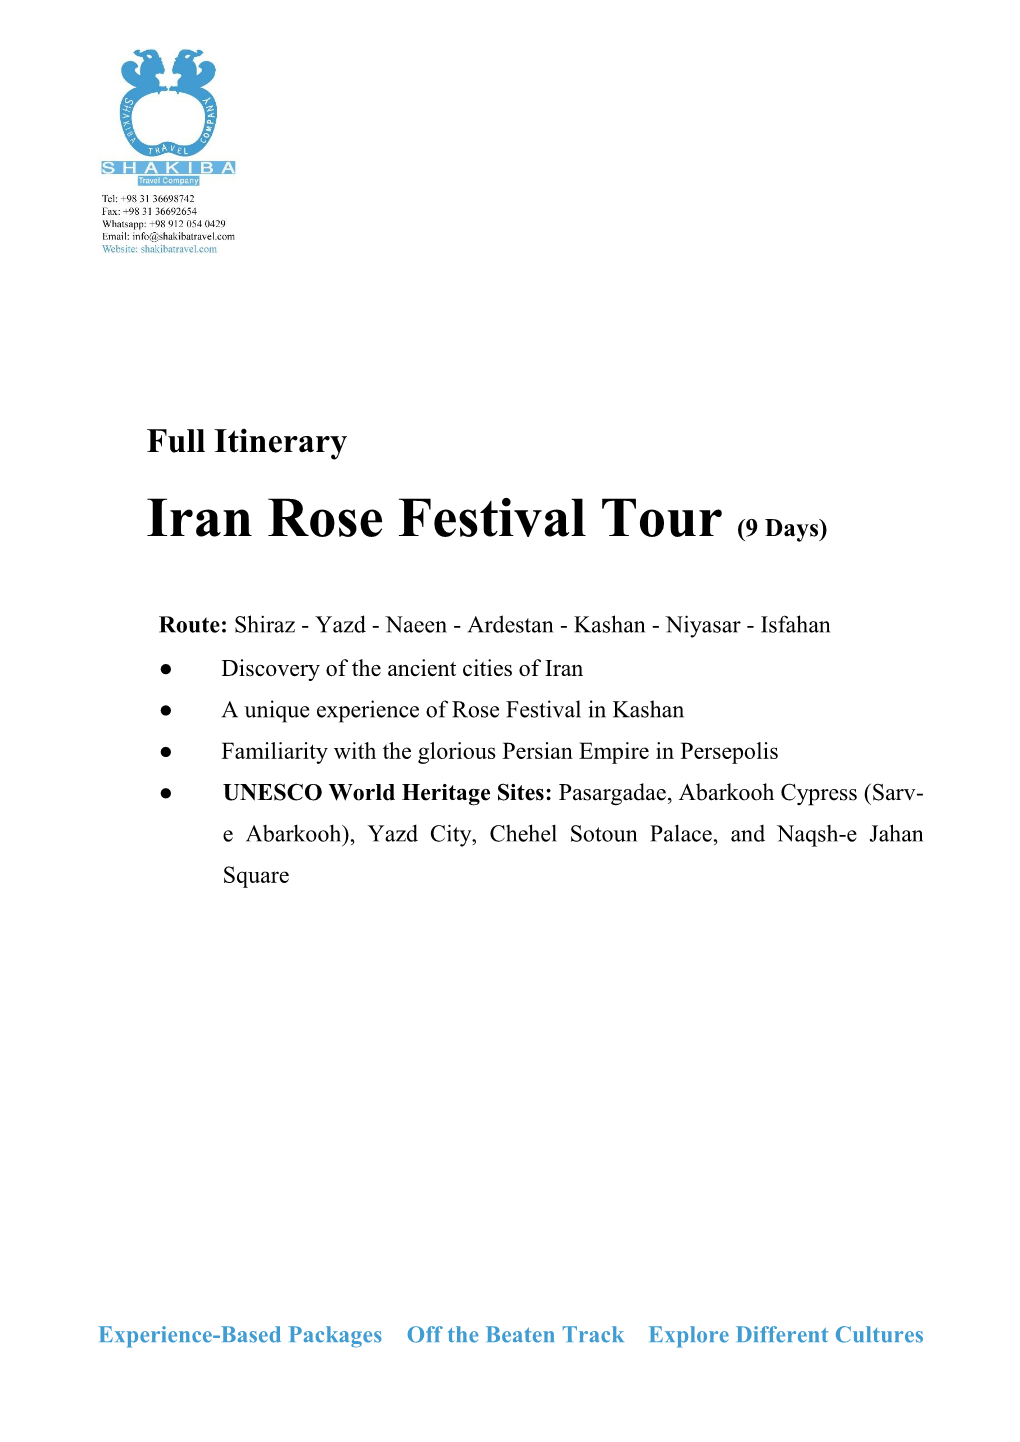 Iran Rose Festival Tour (9 Days)